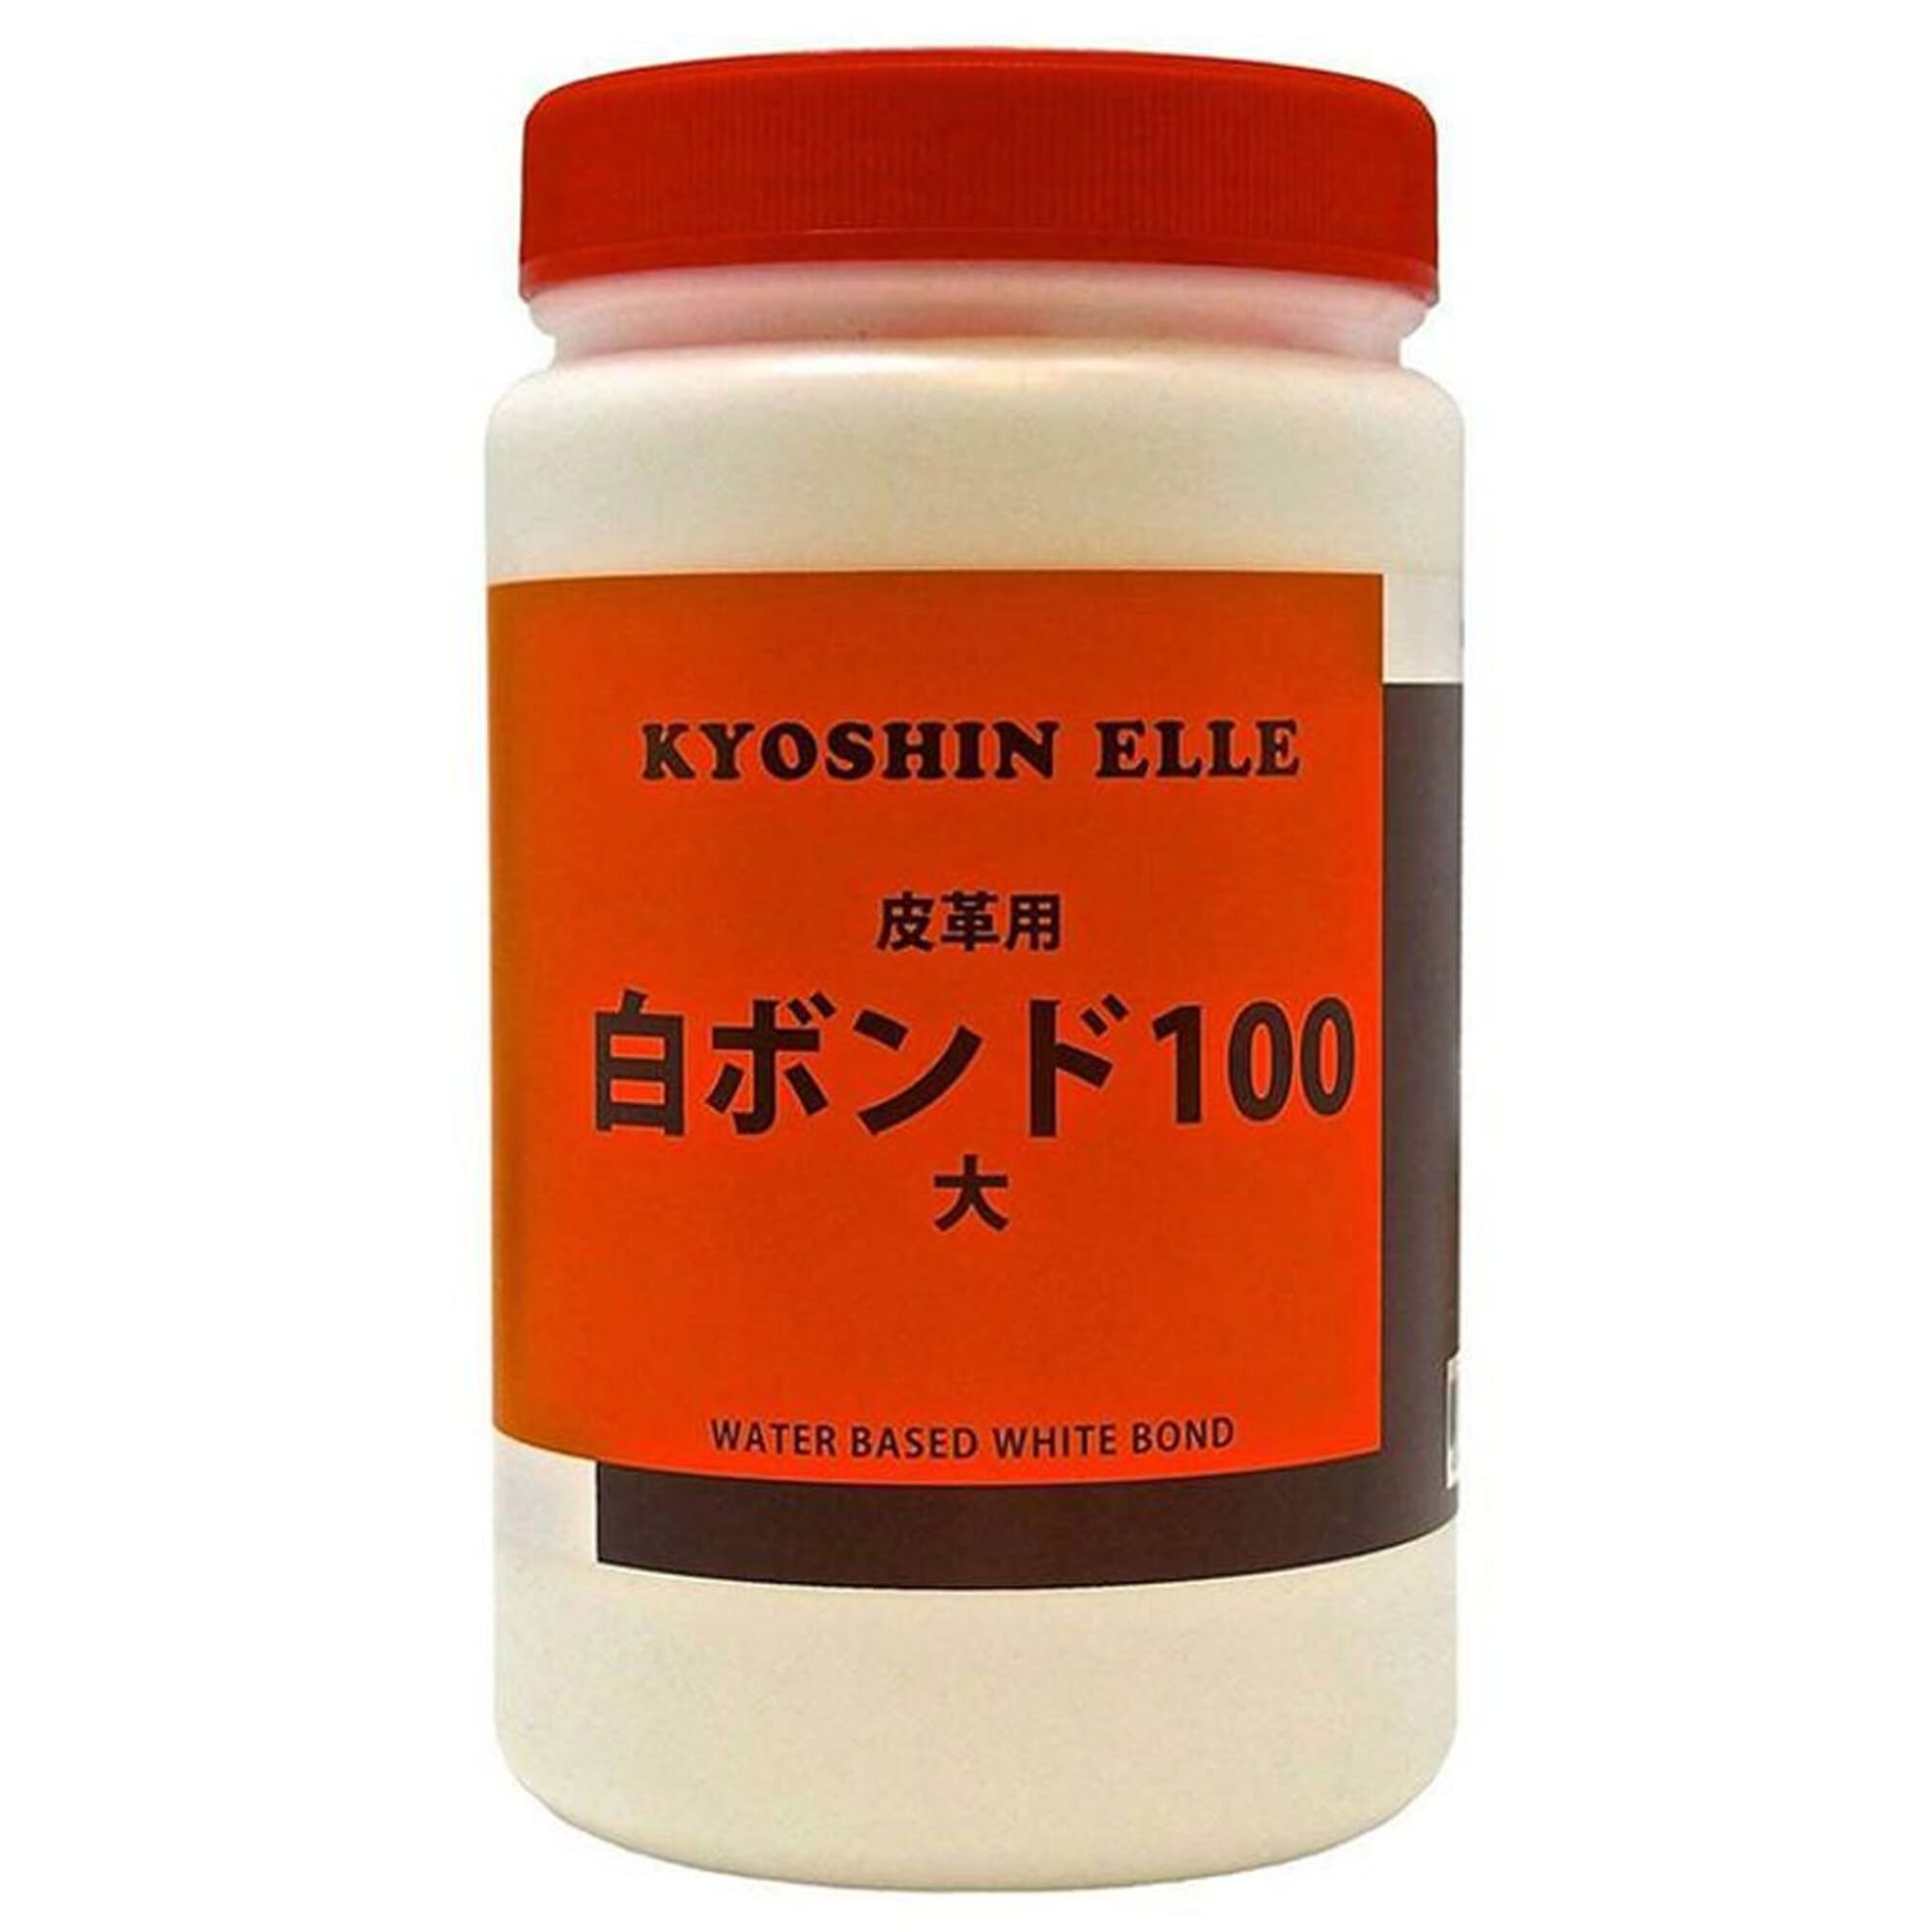 Kyoshin Elle 100 Grade Leathercraft Cement Flexible Glue Water Based Leatherwork White Bond Adhesive 1000ml, for Joining Leather